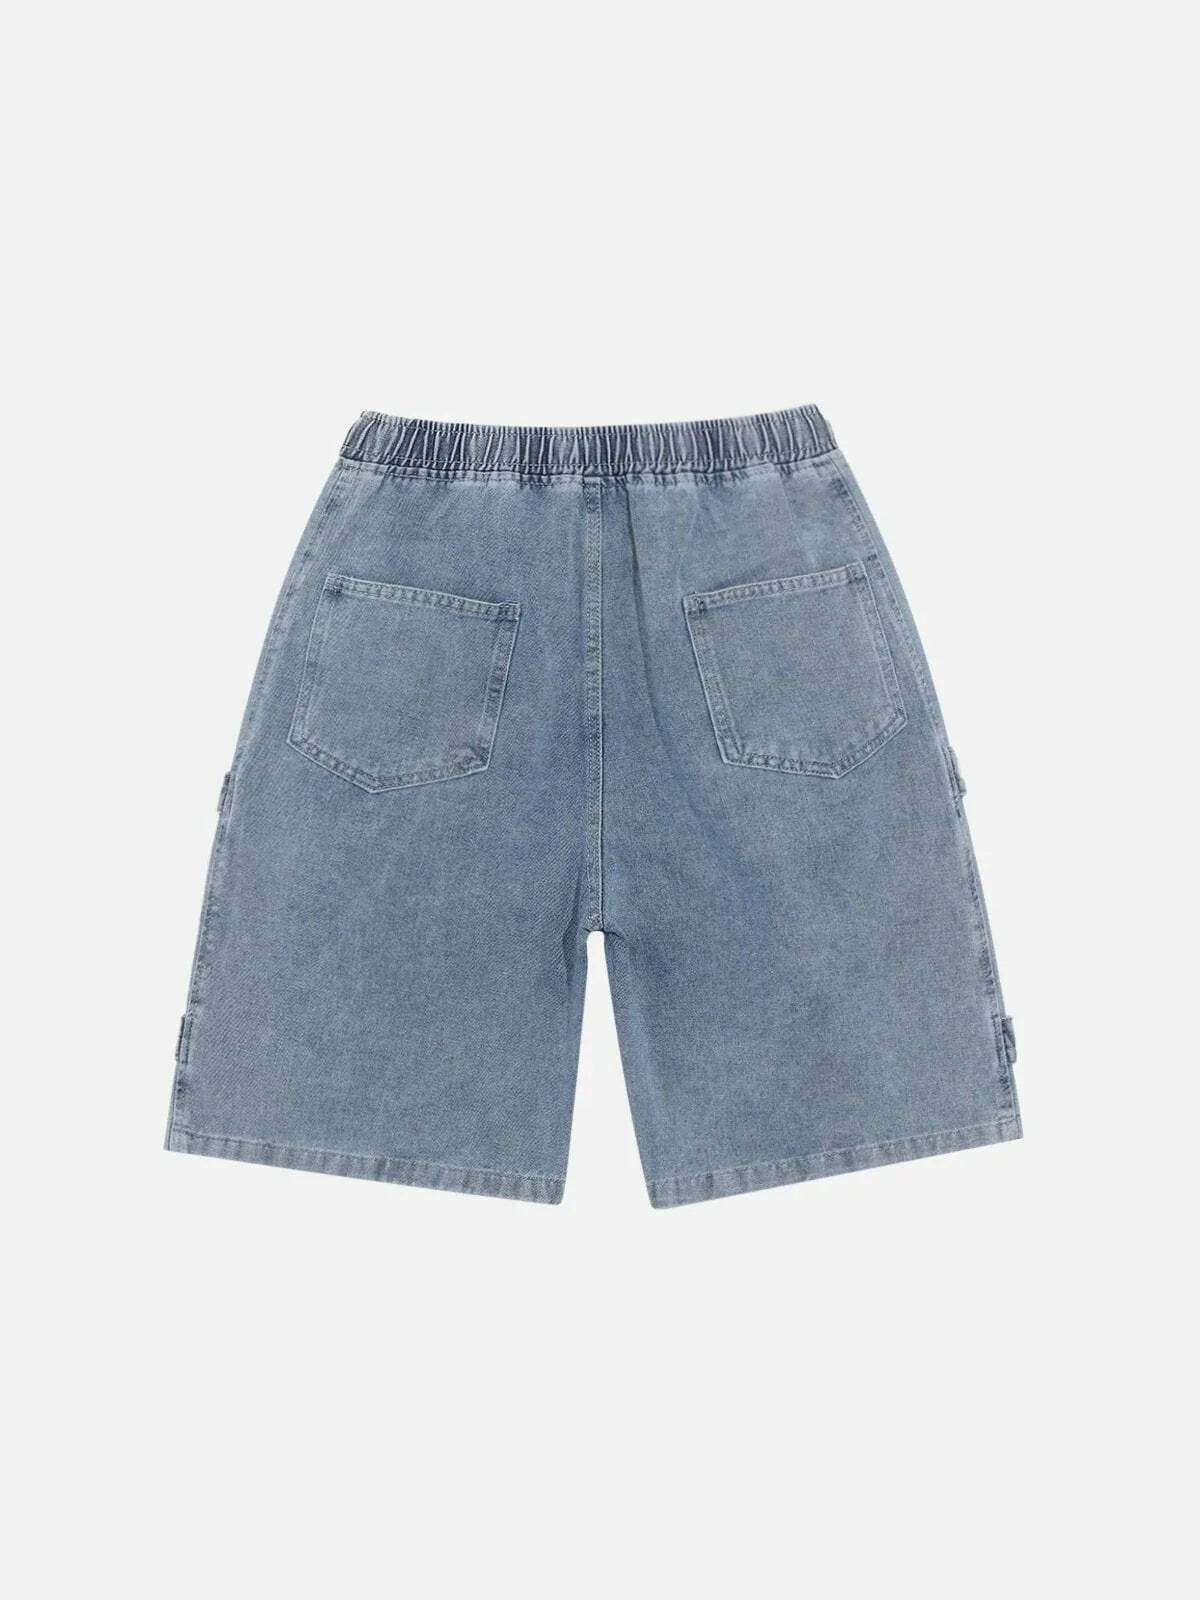 denim splicing highwaist shorts edgy streetwear essential 6147